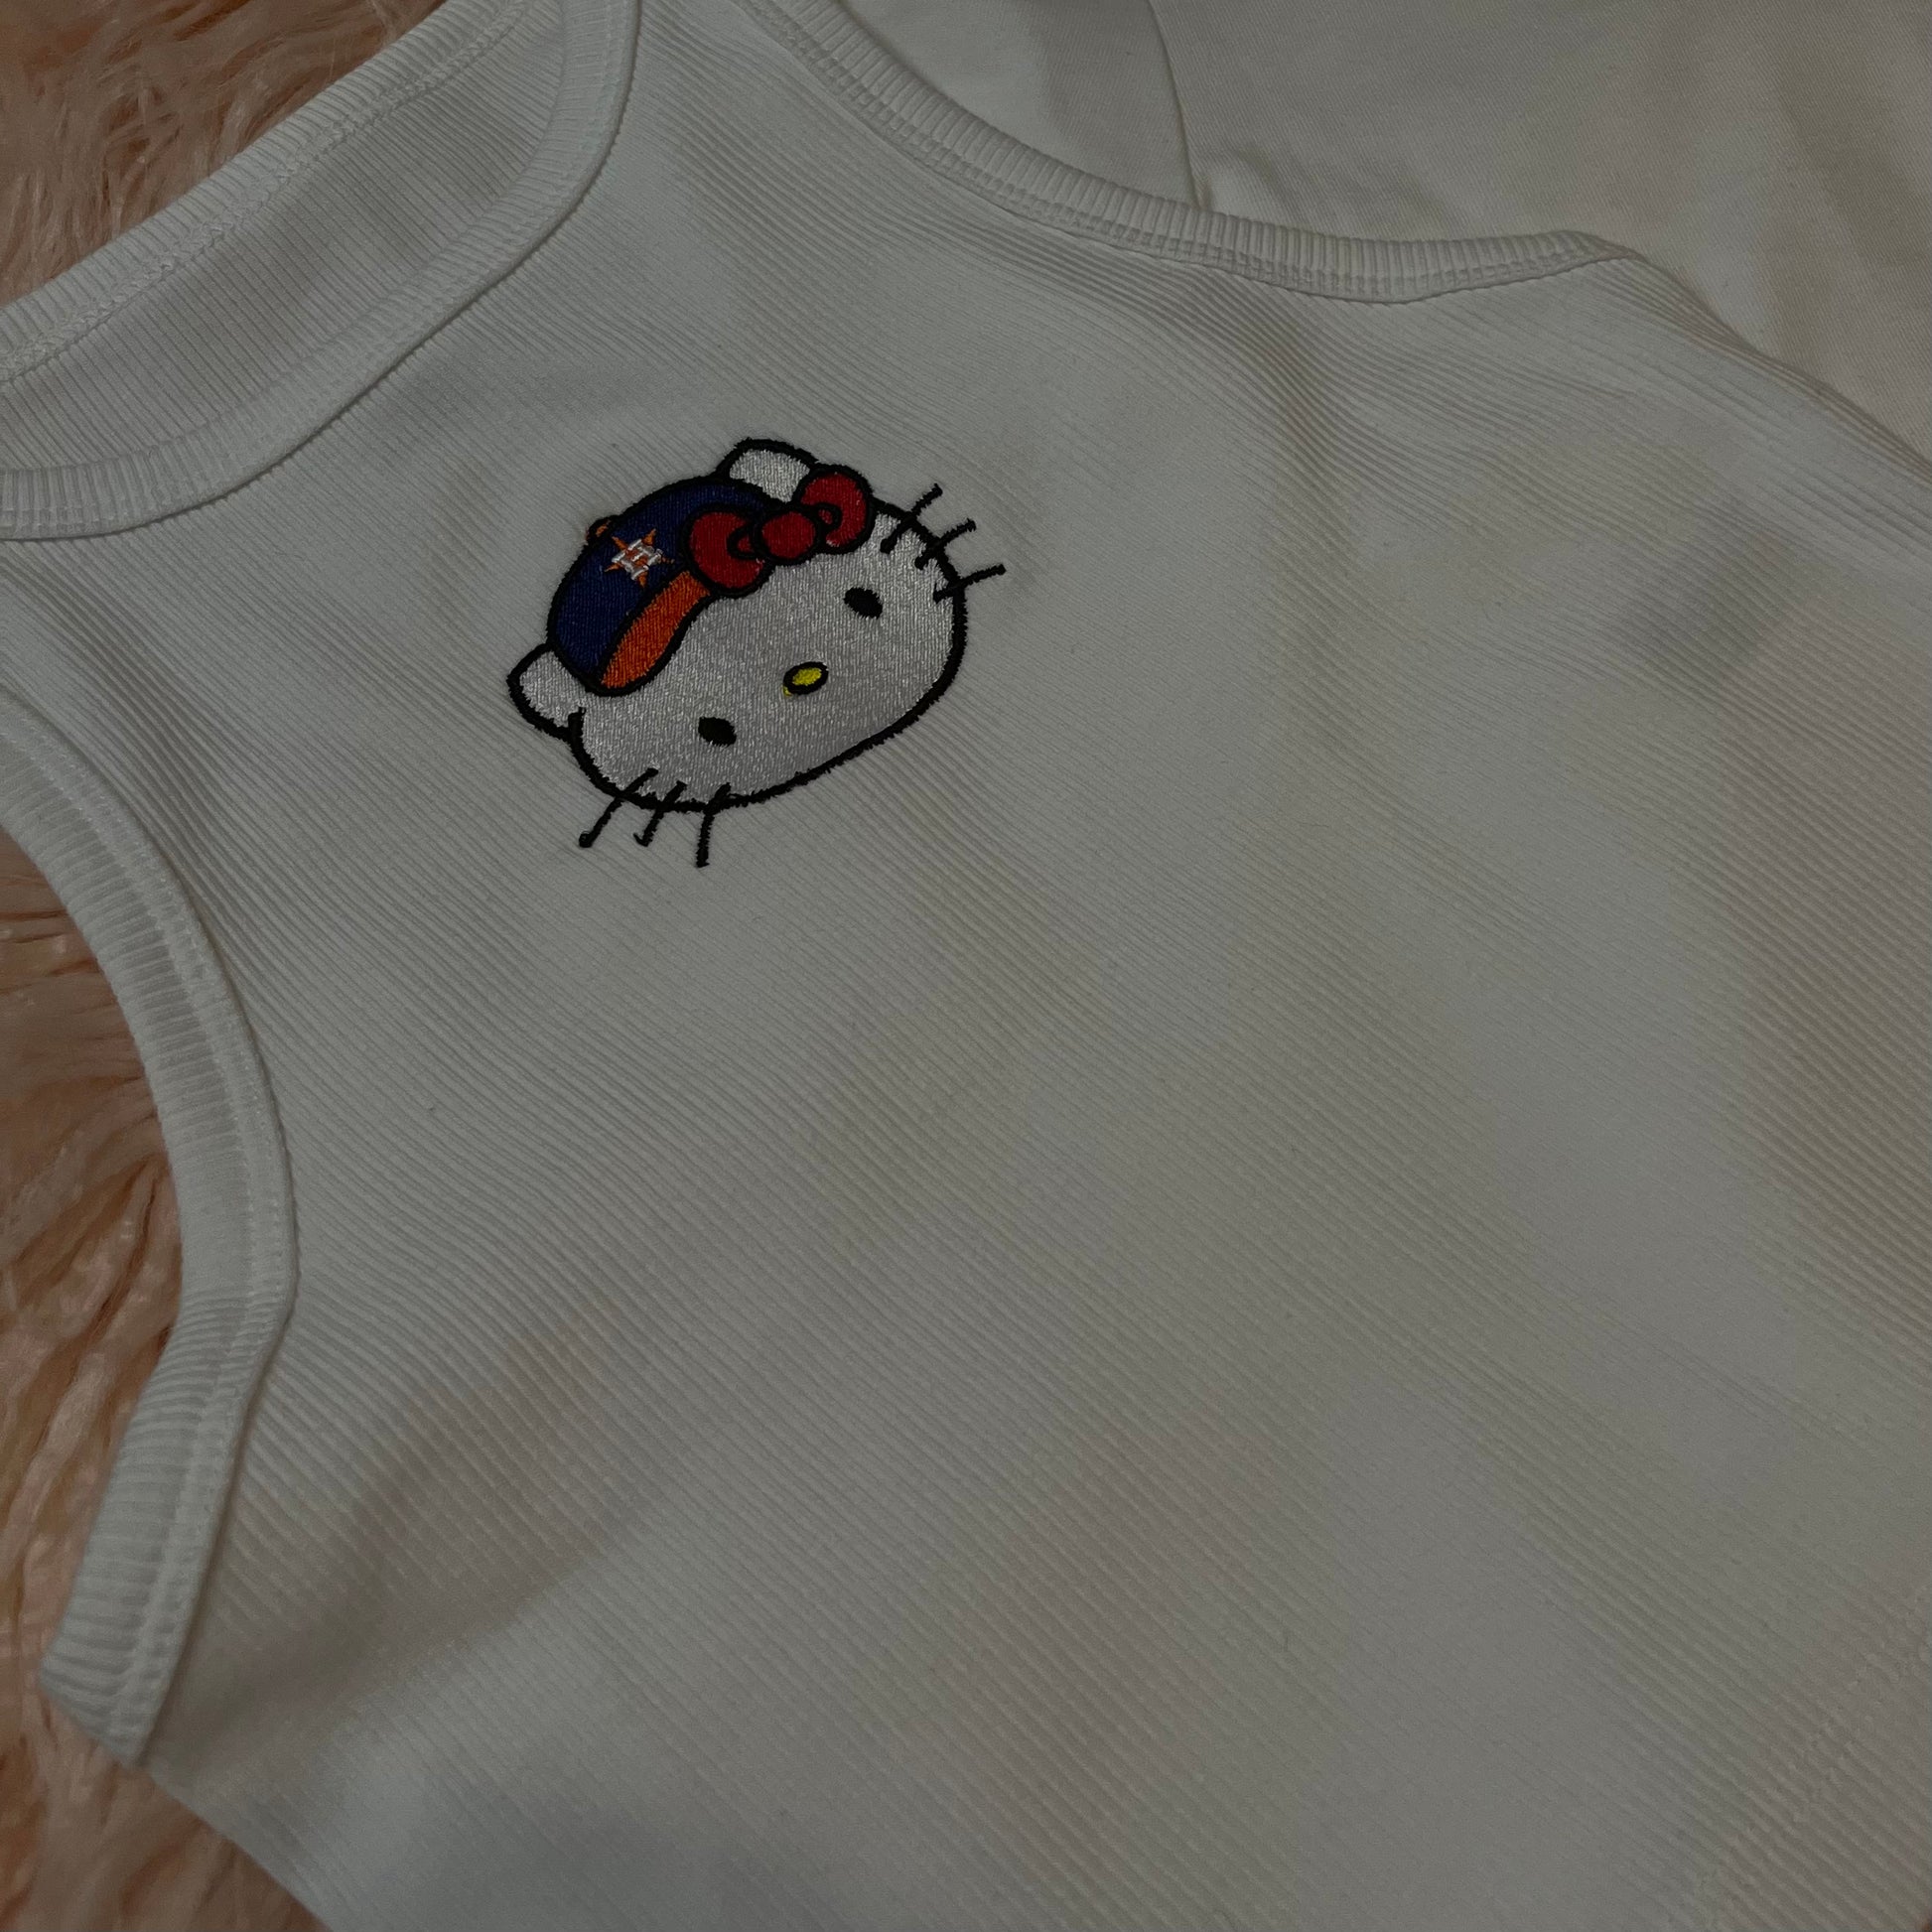 Astros Kitty T-shirt 